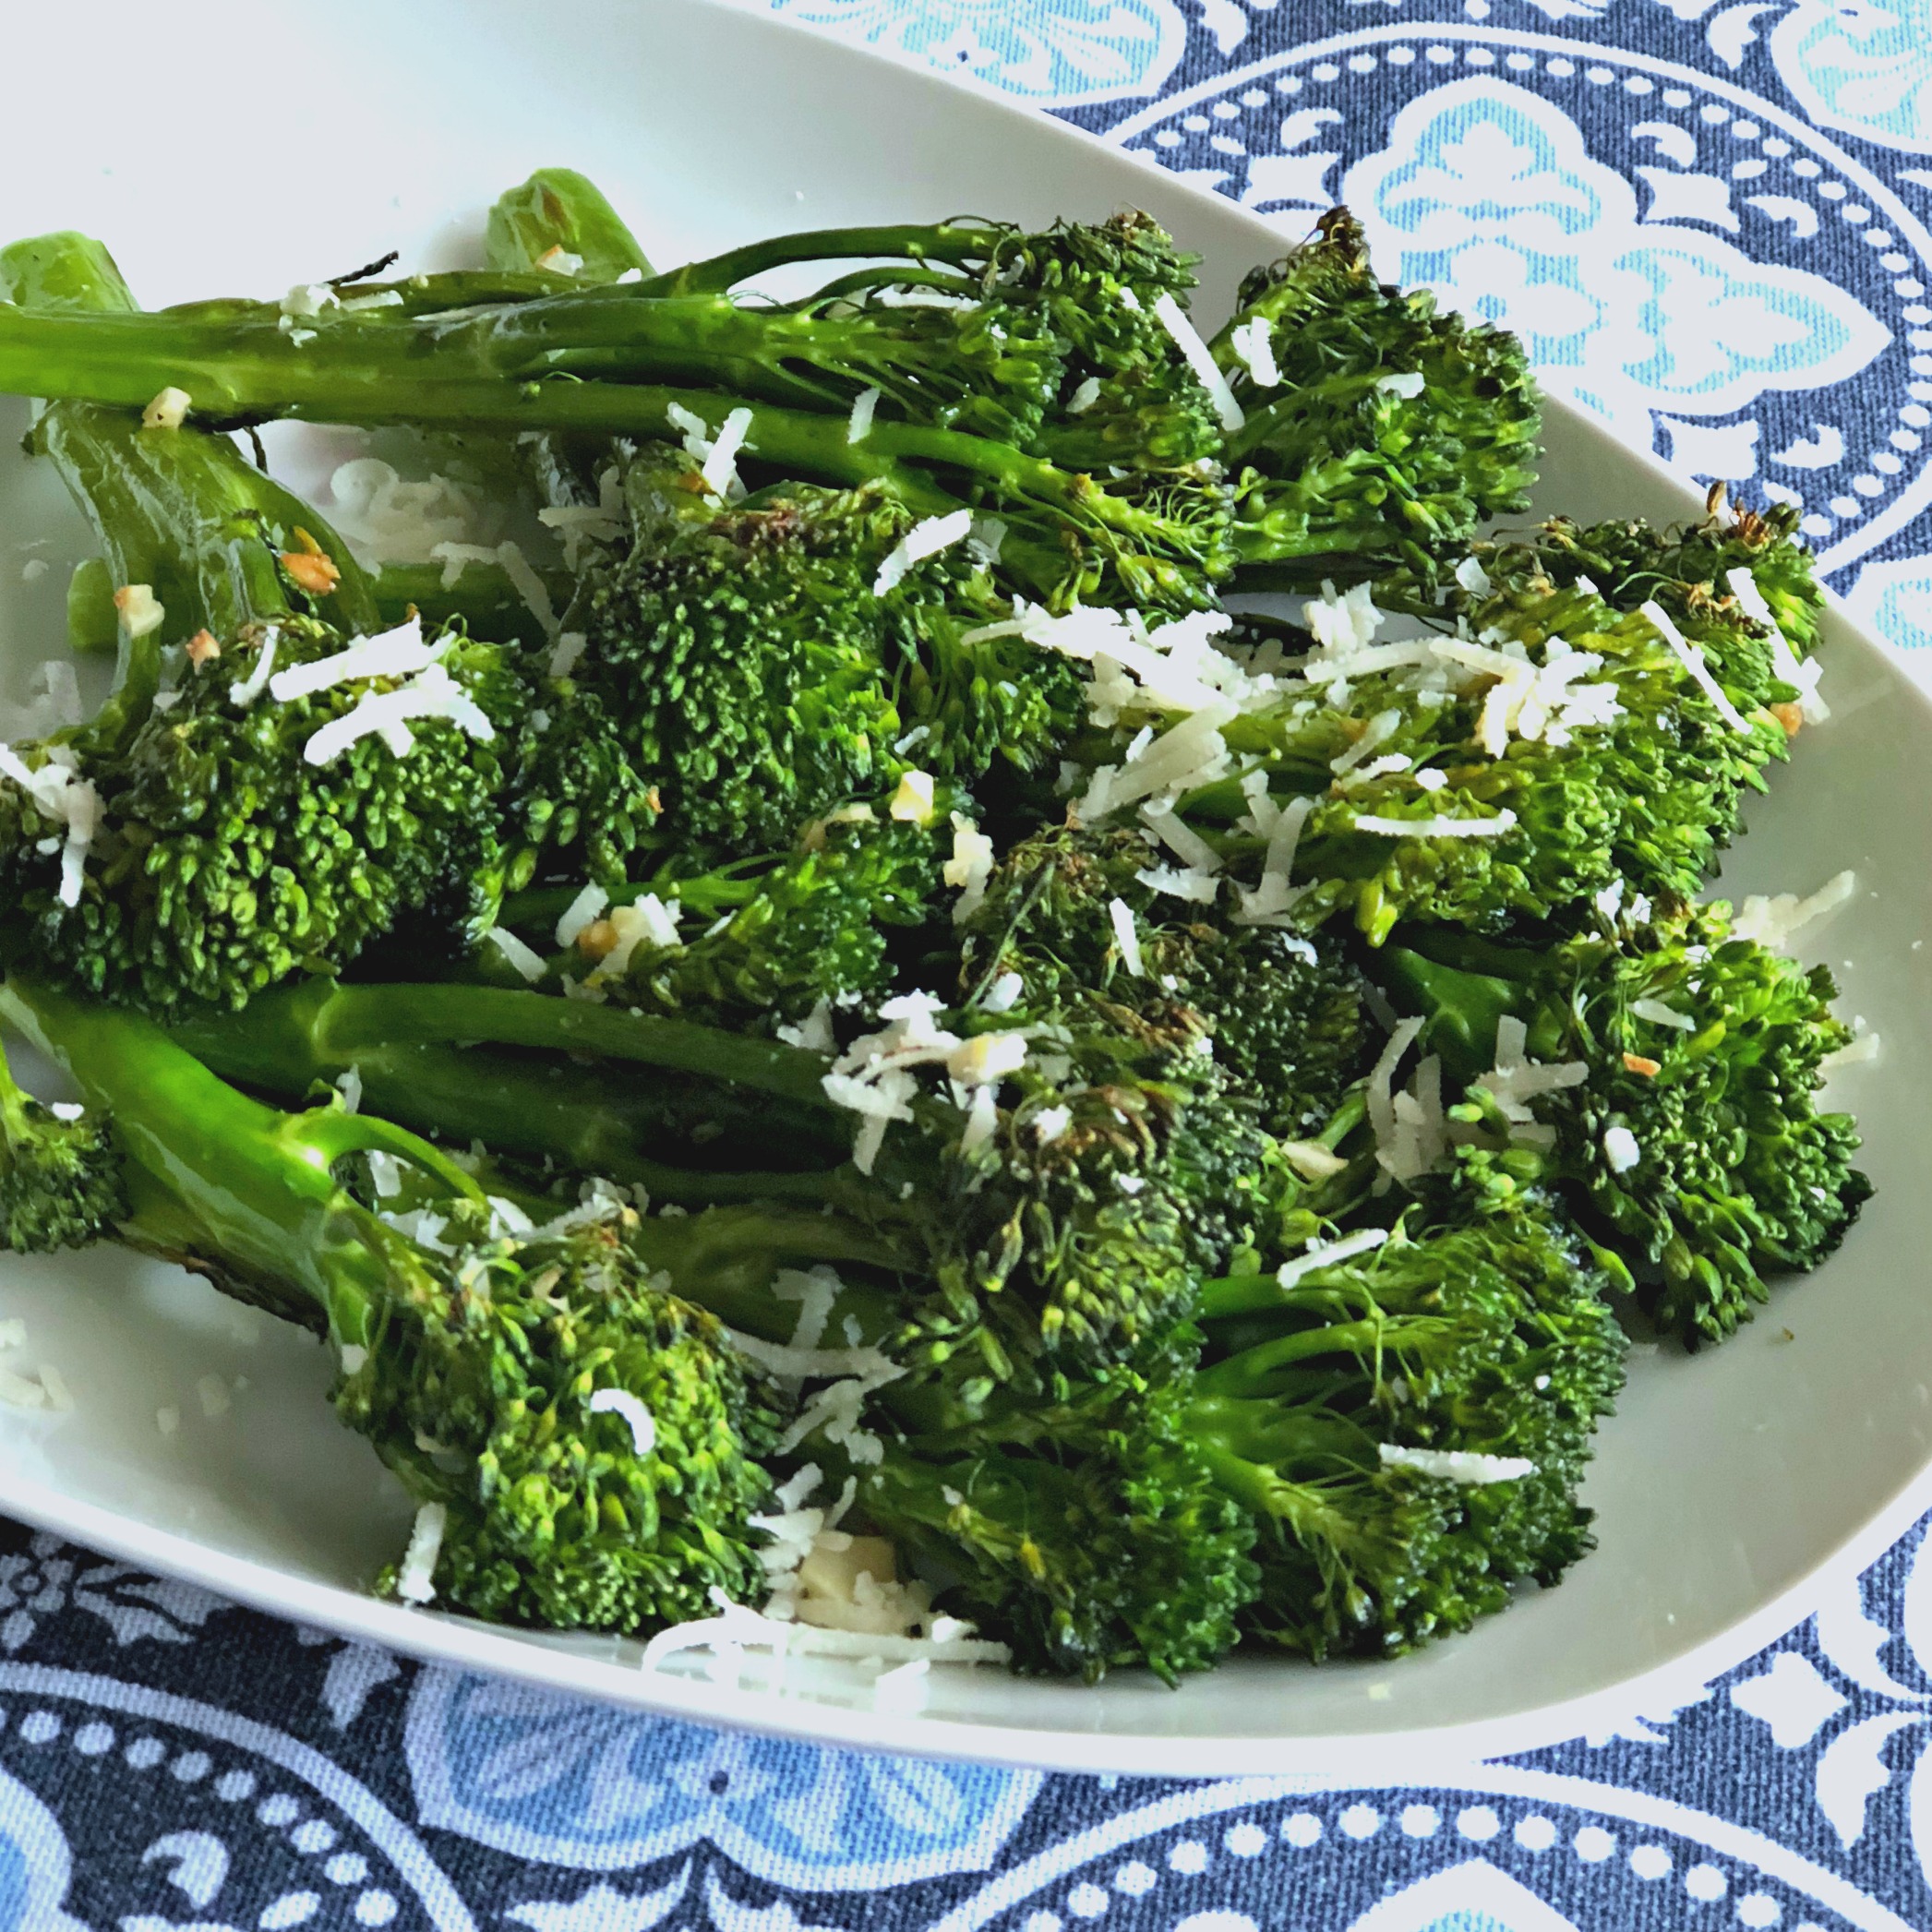 Oven-Roasted Broccolini